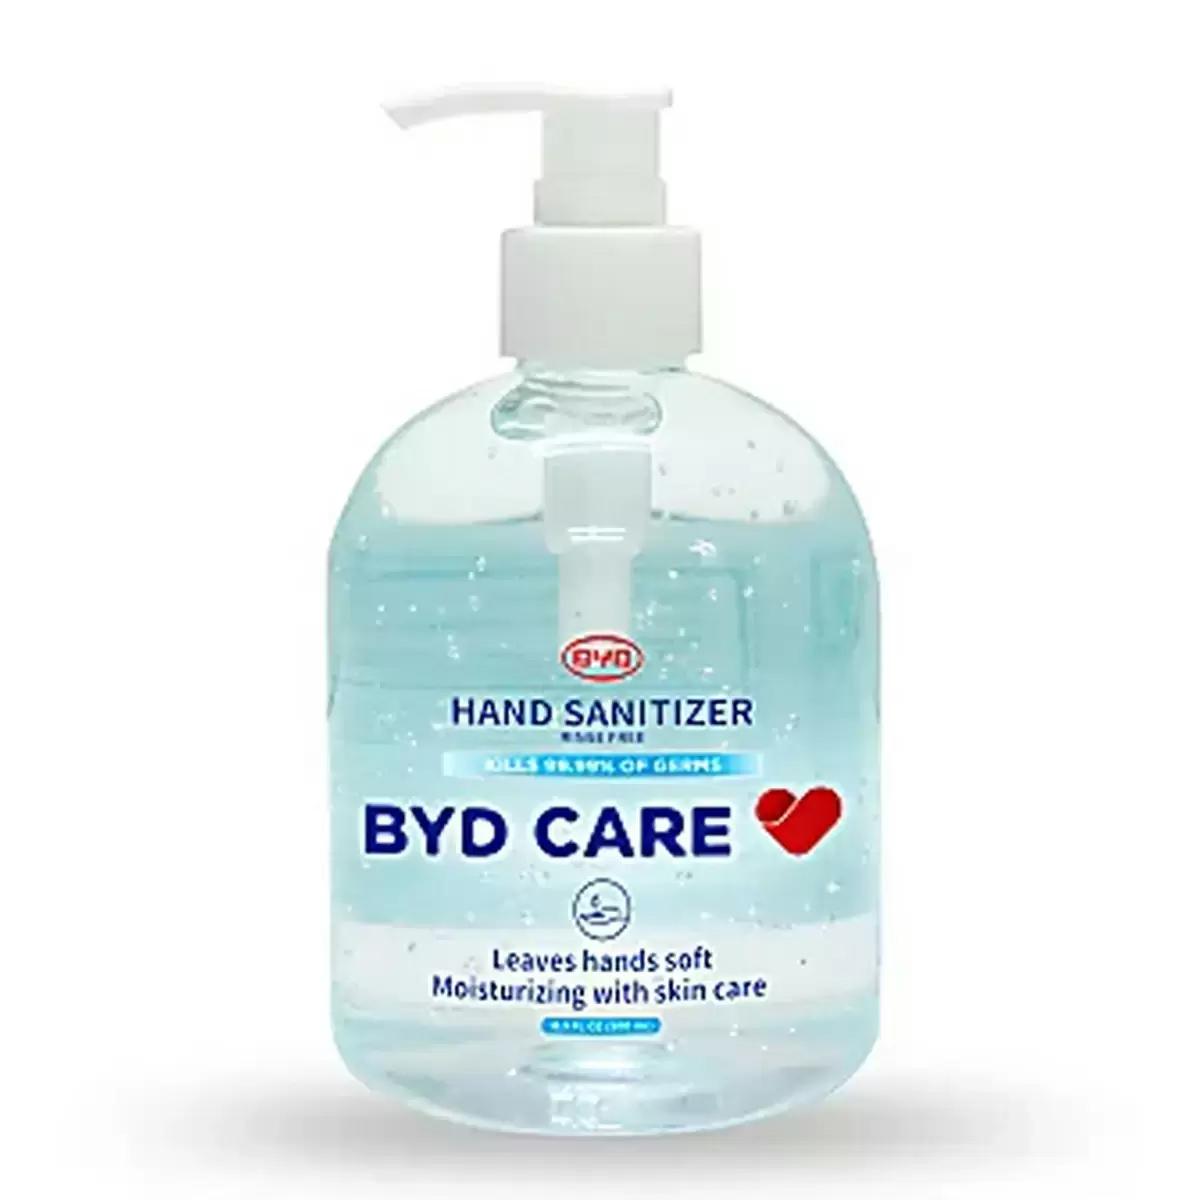 BYD Care Hand Sanitizer Pump Bottle for $0.10